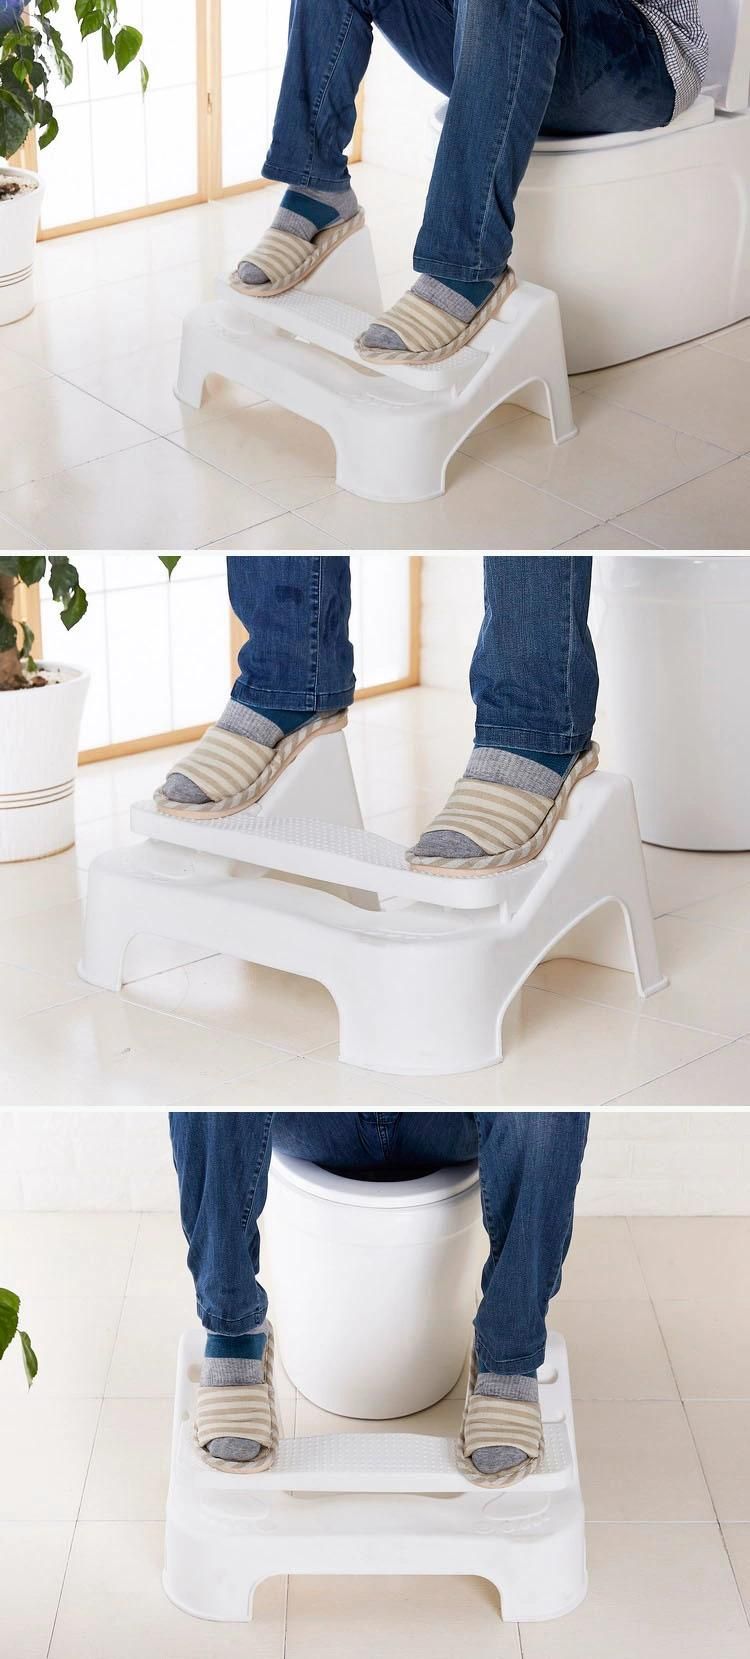 2021 New Adjustable Plastic Bathroom Toilet Stool Squatty Potty